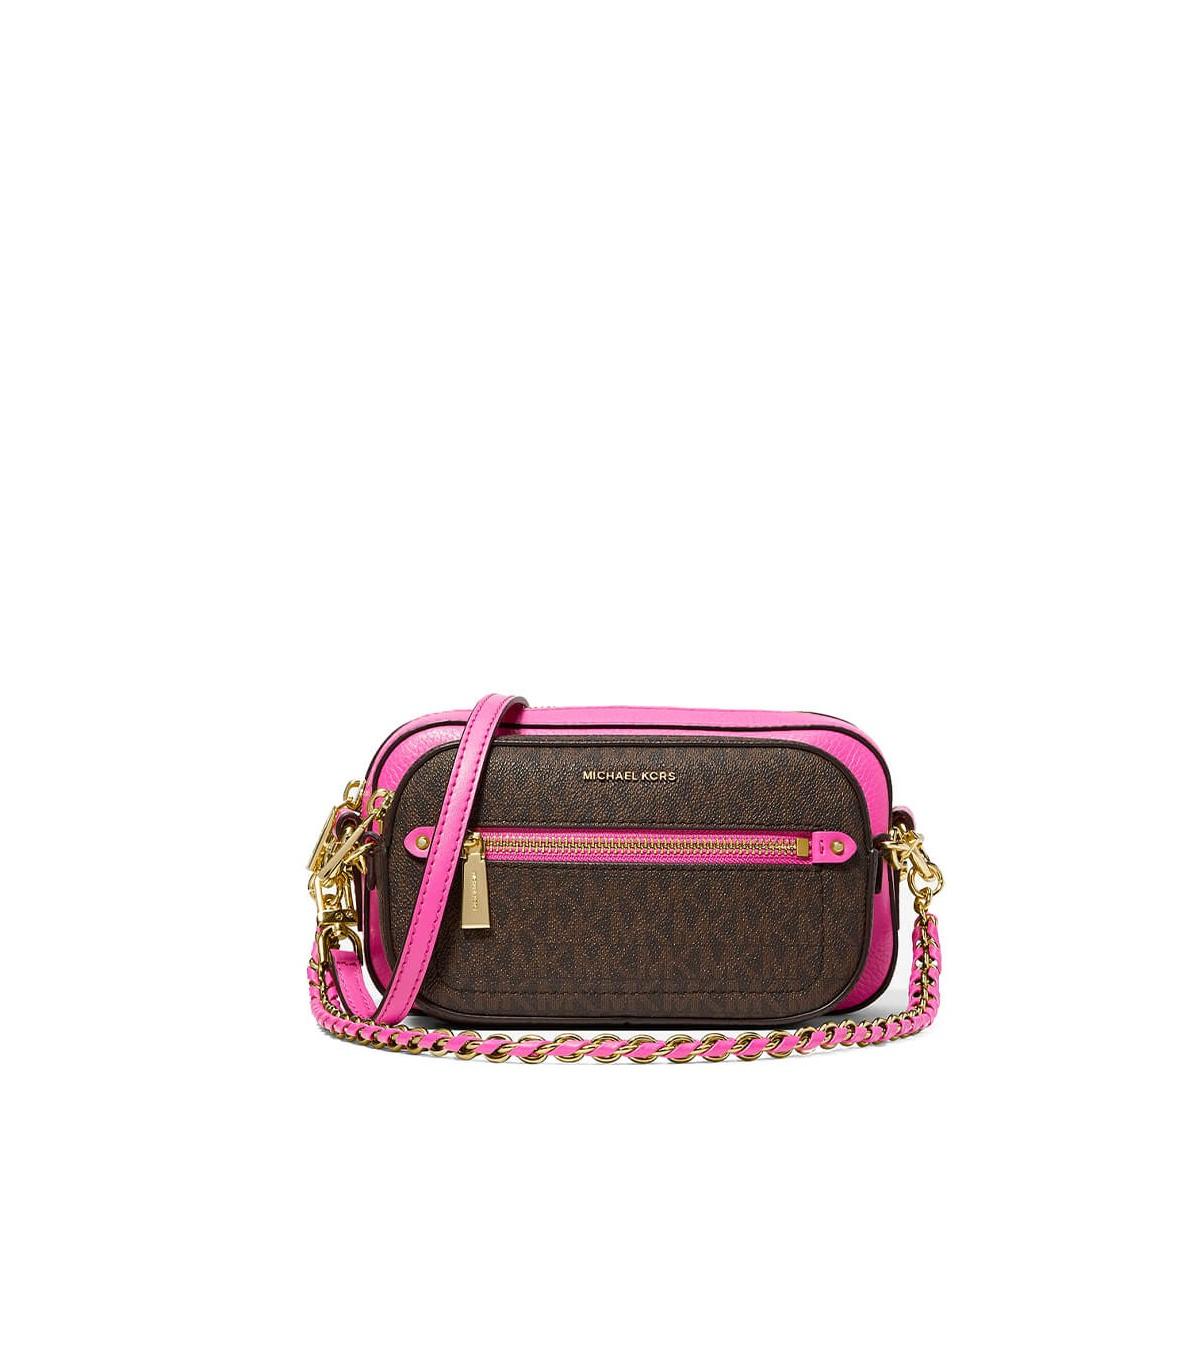 Michael Kors Outlet: Michael Jet Set bag in textured leather - Pink